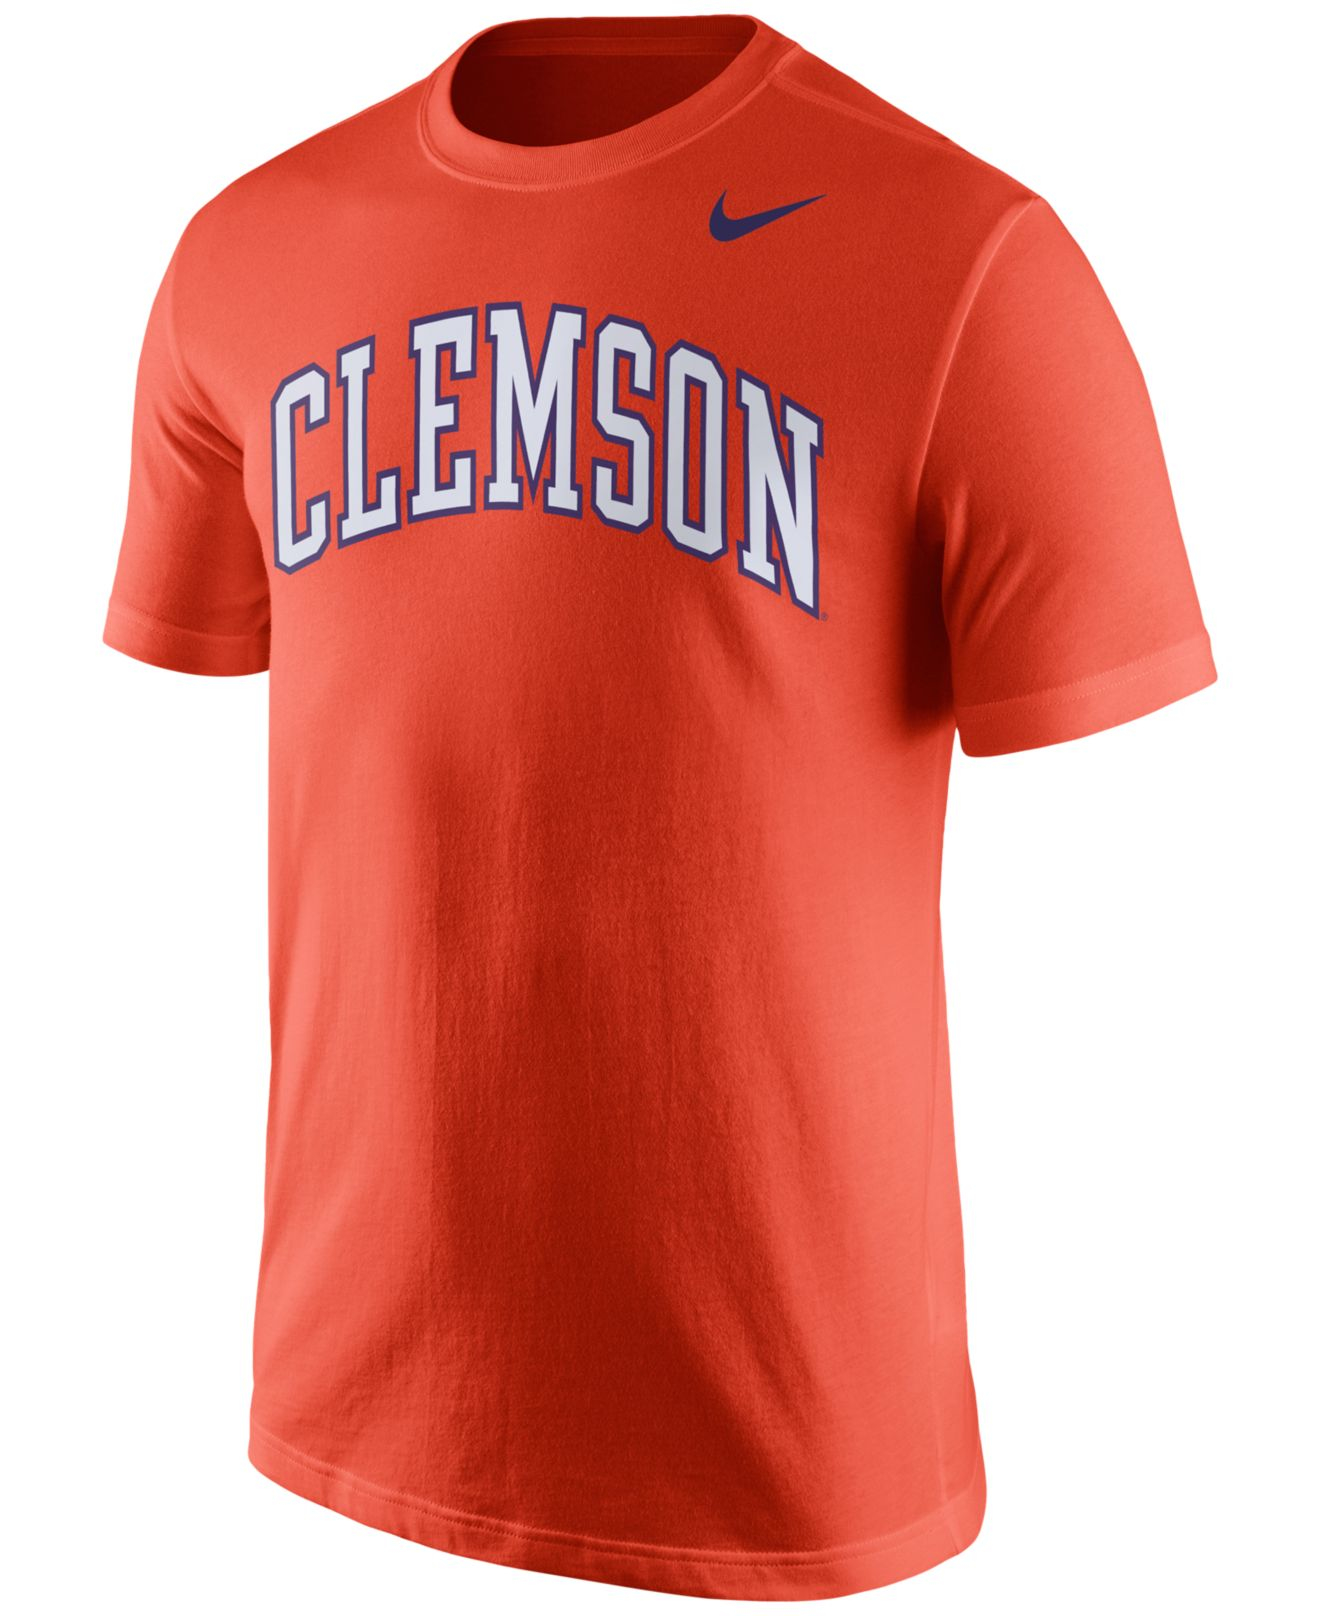 Lyst - Nike Men's Clemson Tigers Wordmark T-shirt in Orange for Men